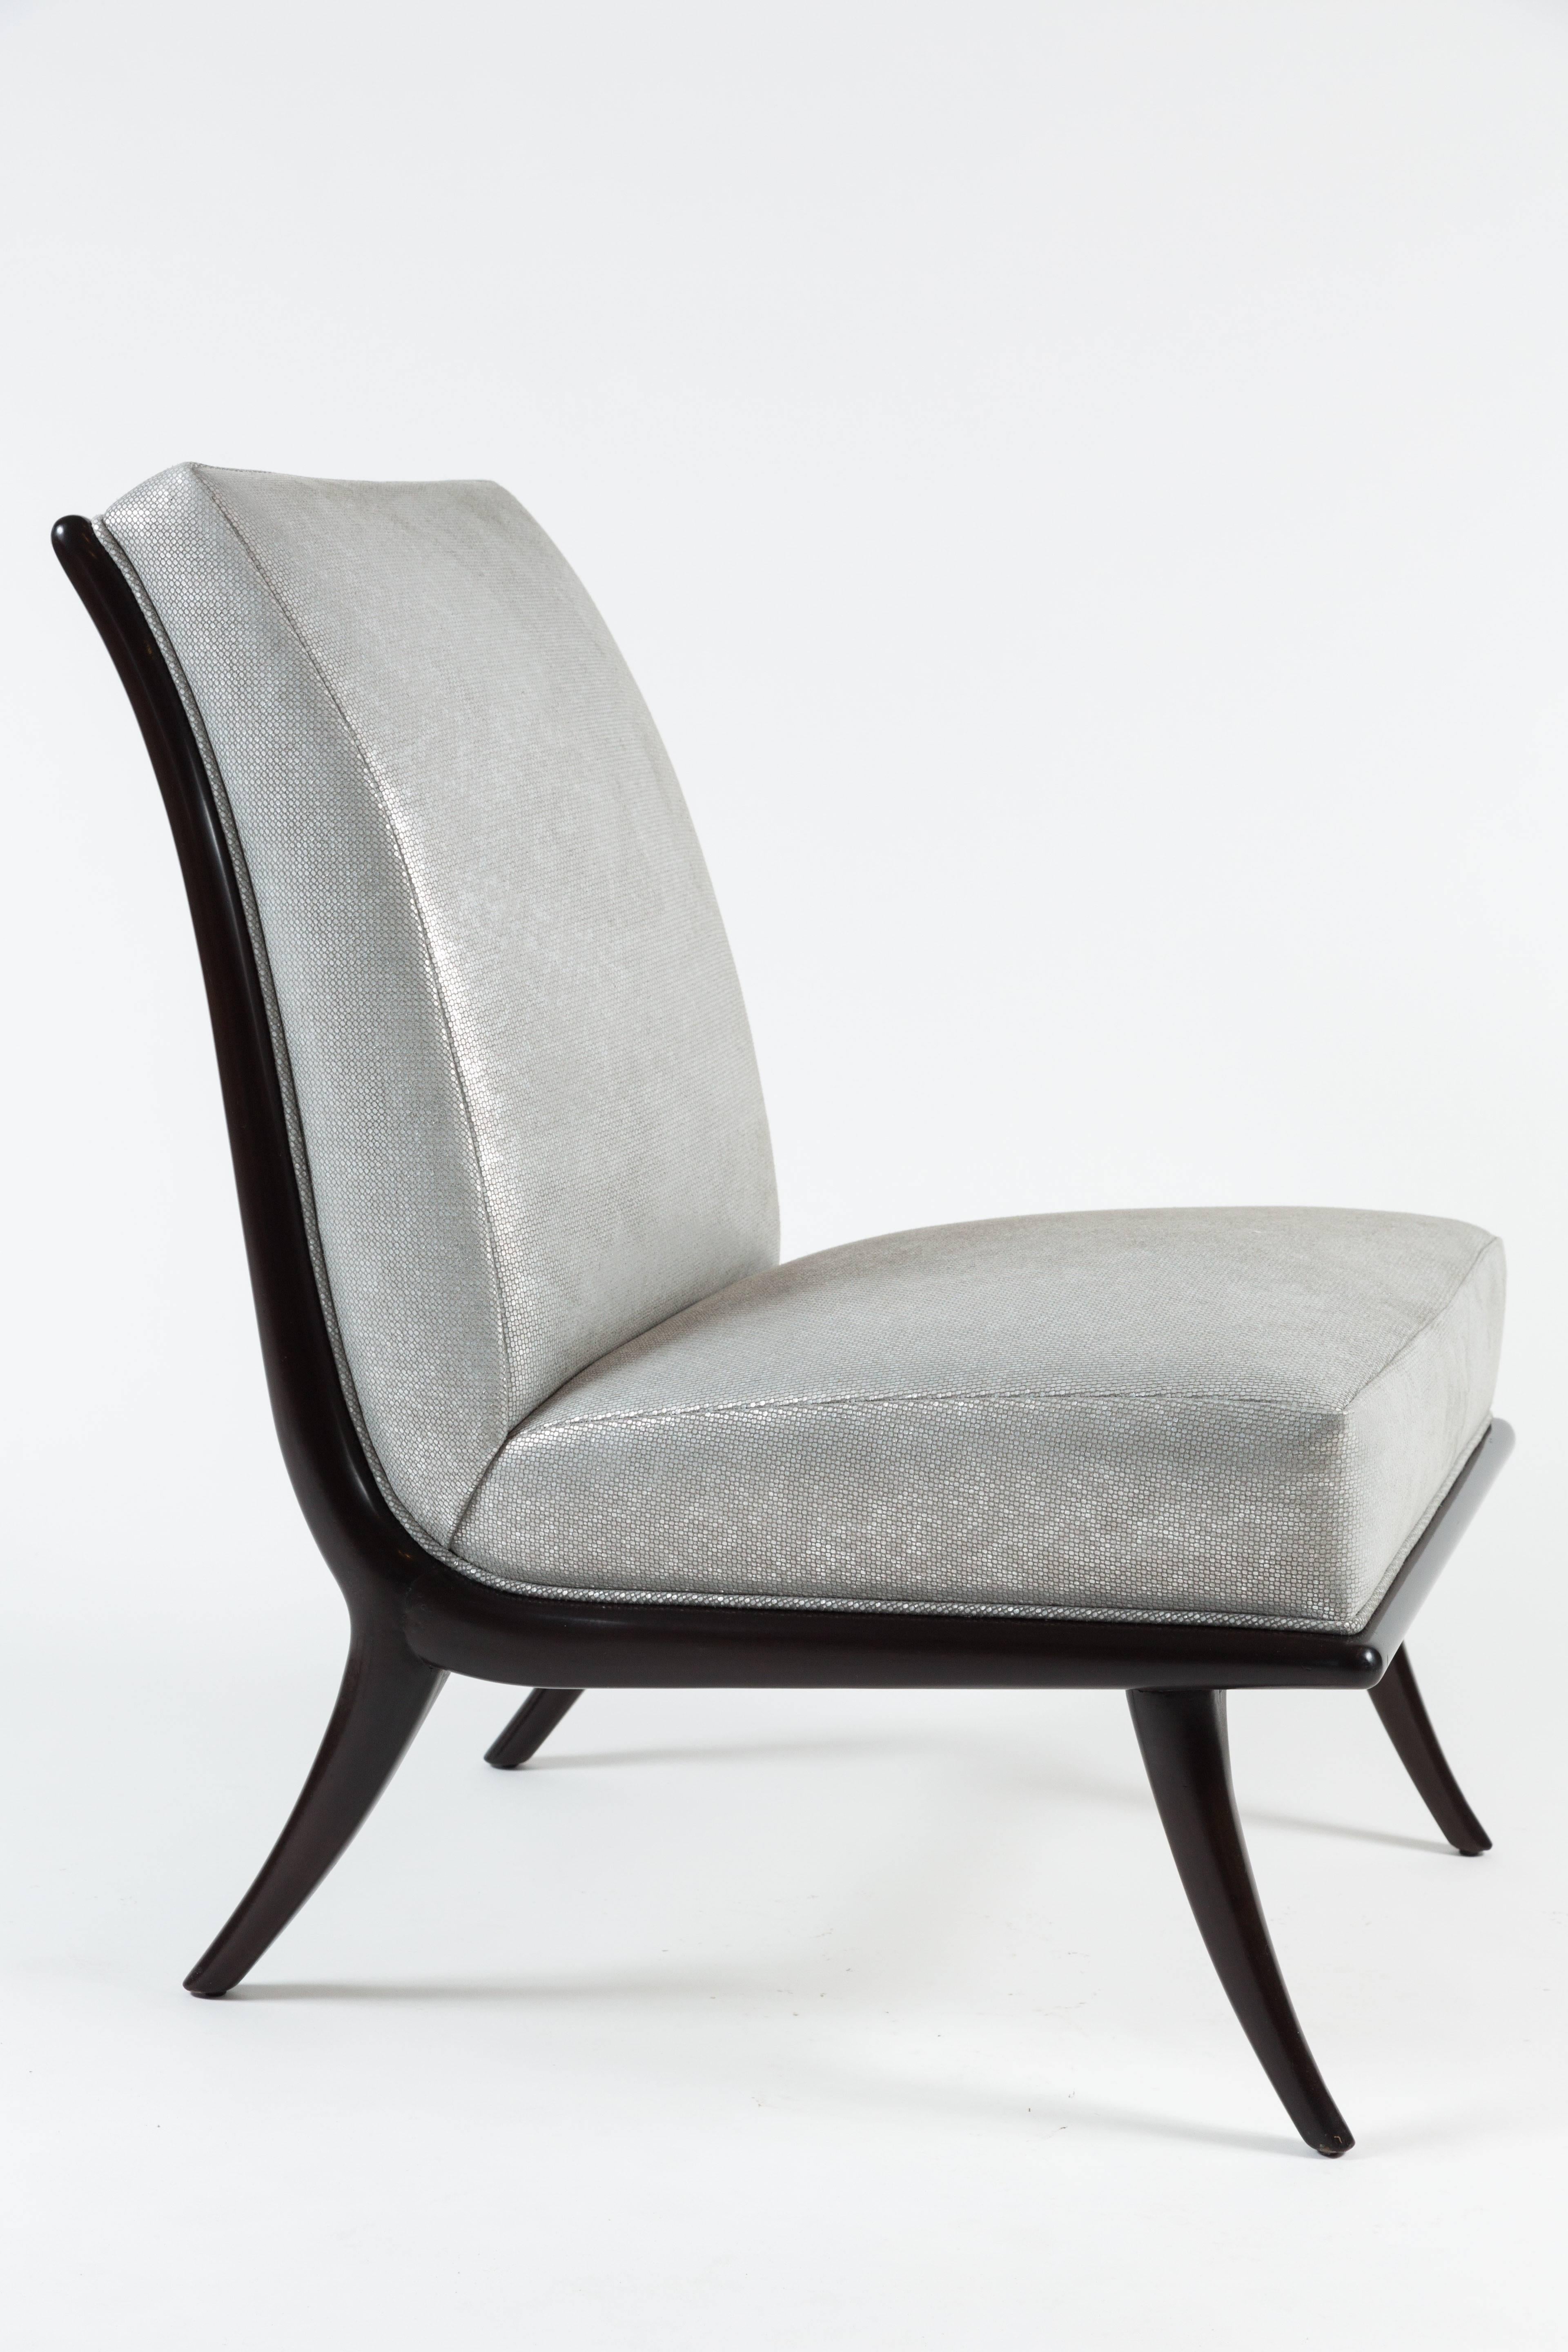 Mid-20th Century Pair of Chic Slipper Chairs by T.H. Robsjohn-Gibbings